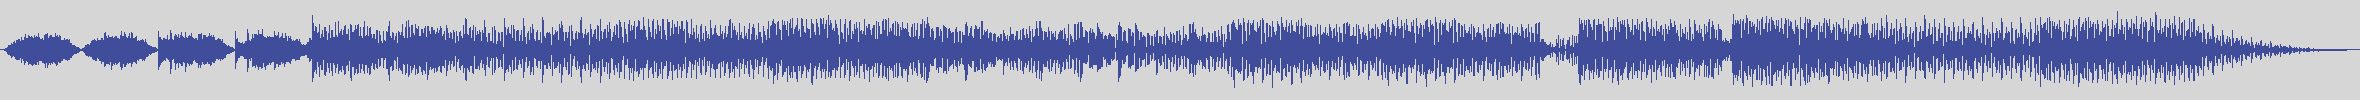 nf_boyz_records [NFY041] Danielino Dj - Fallein [Original Mix] audio wave form